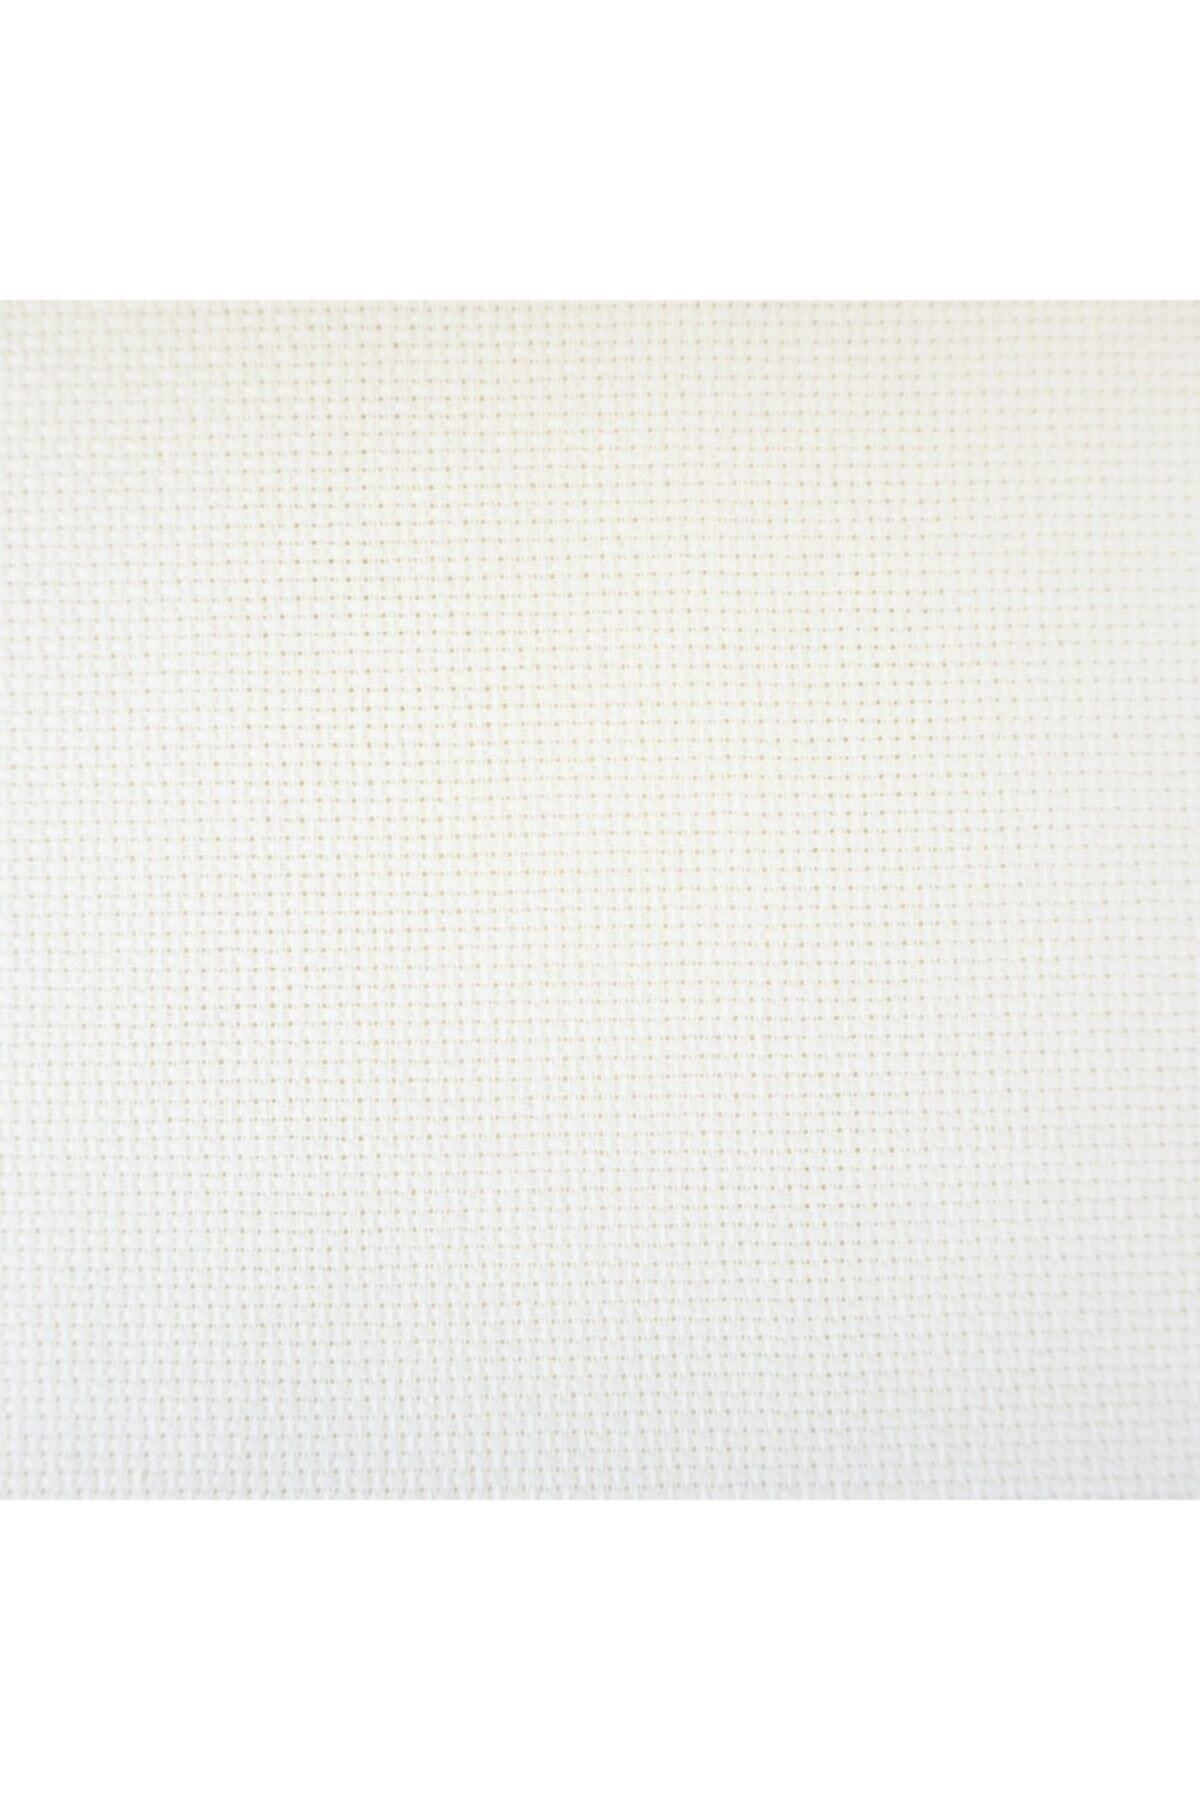 Etamin Kumaşı Orijinal Home Series Kırık Beyaz 75x130